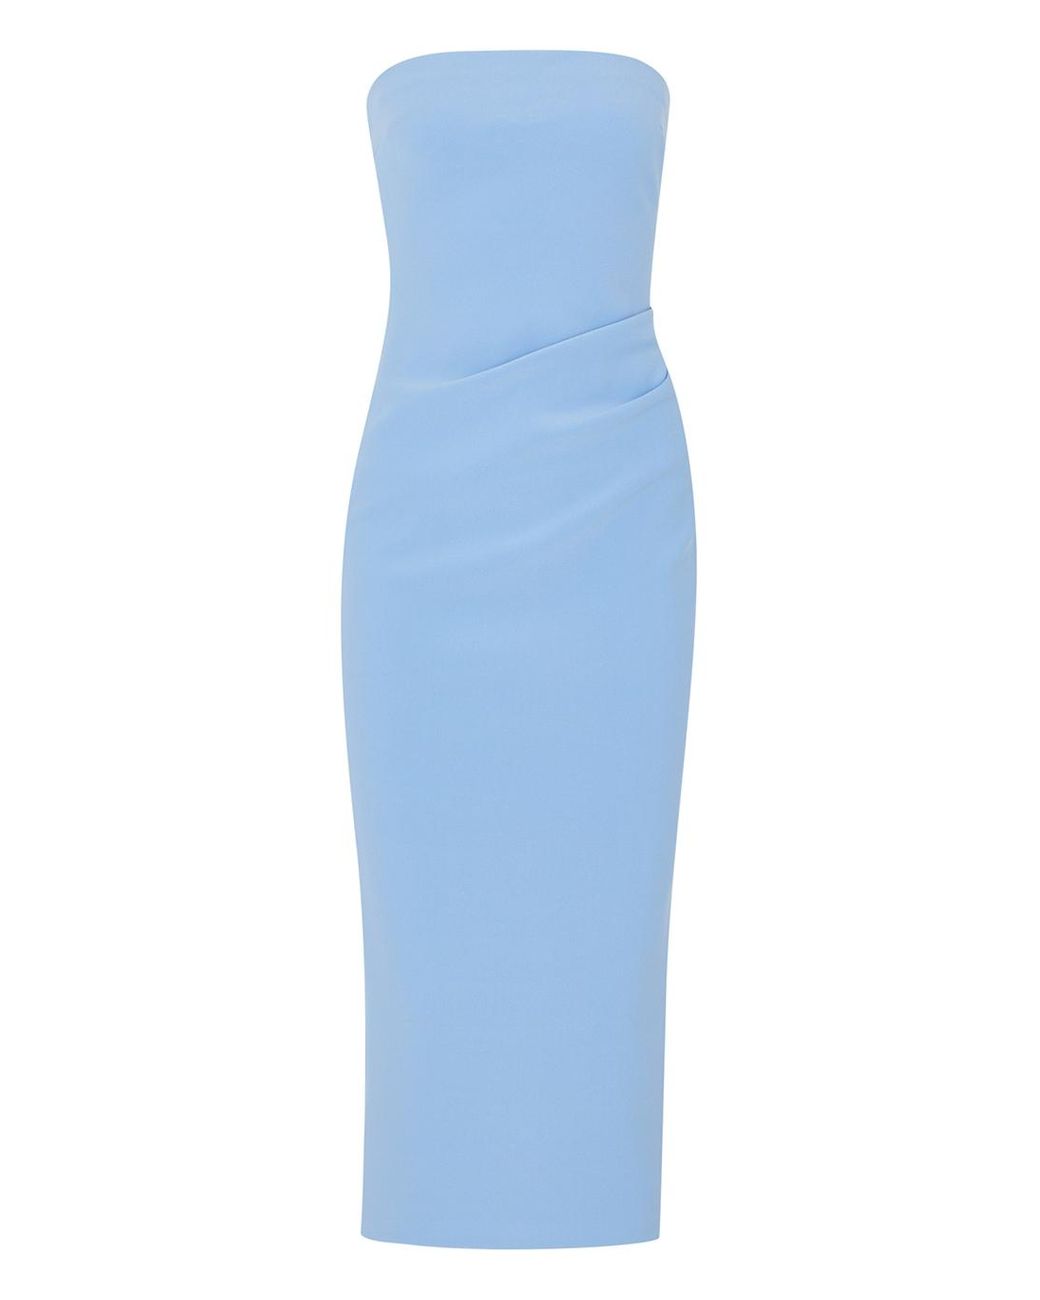 Bec & Bridge Karina Strapless Midi Dress in Blue | Lyst